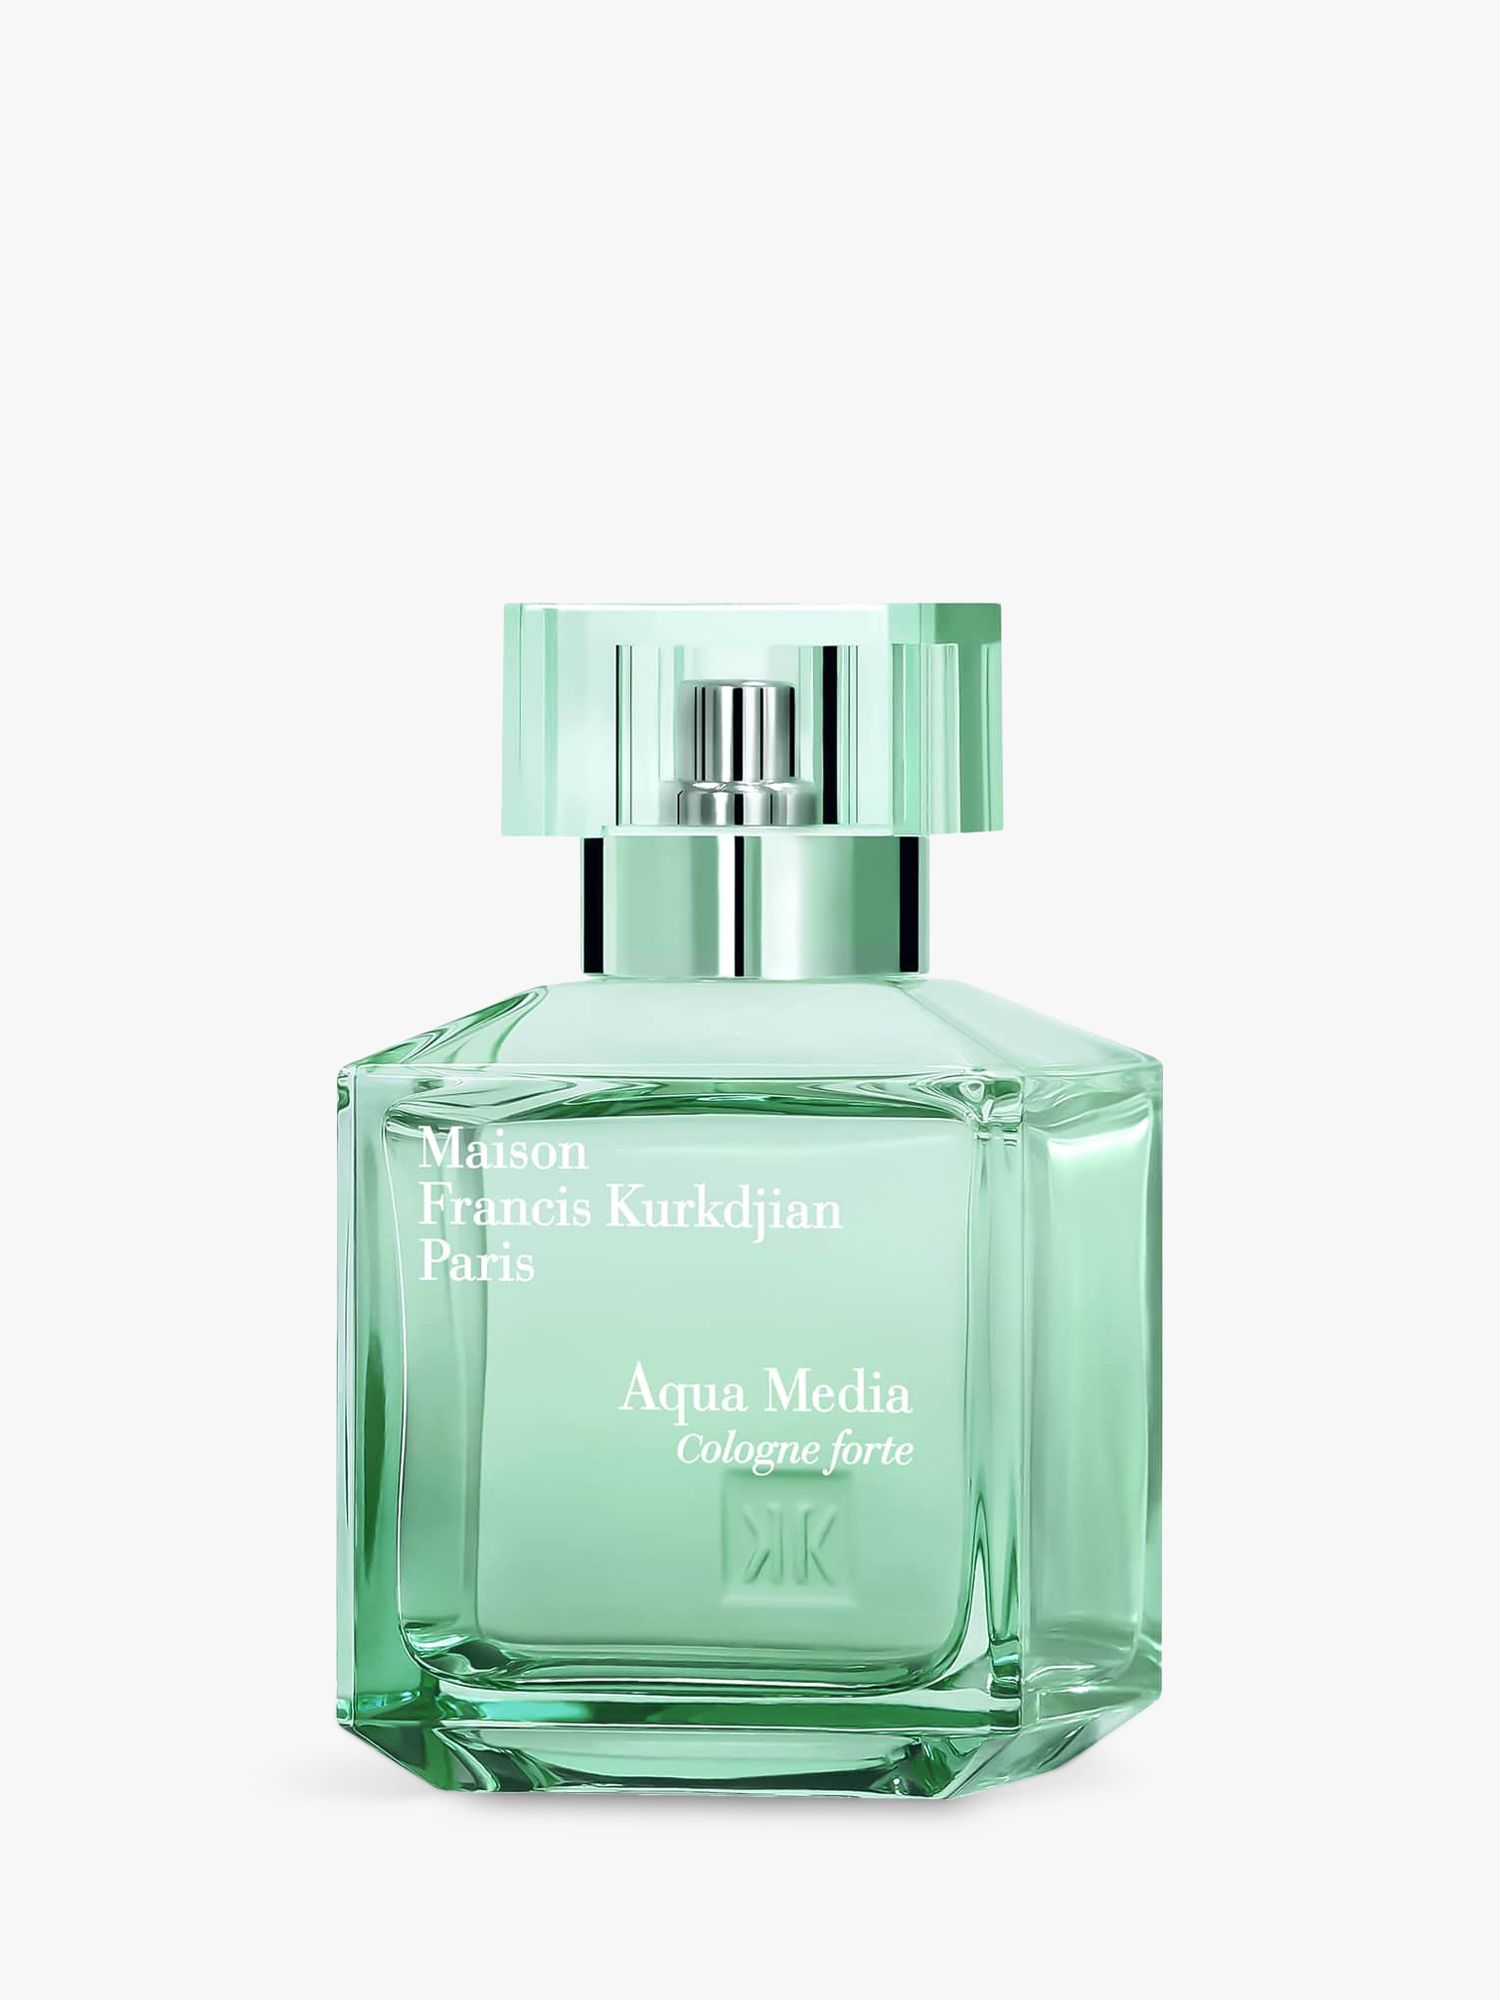 Maison Francis Kurkdjian Aqua Media Cologne Forte Eau de Parfum, 70ml 1